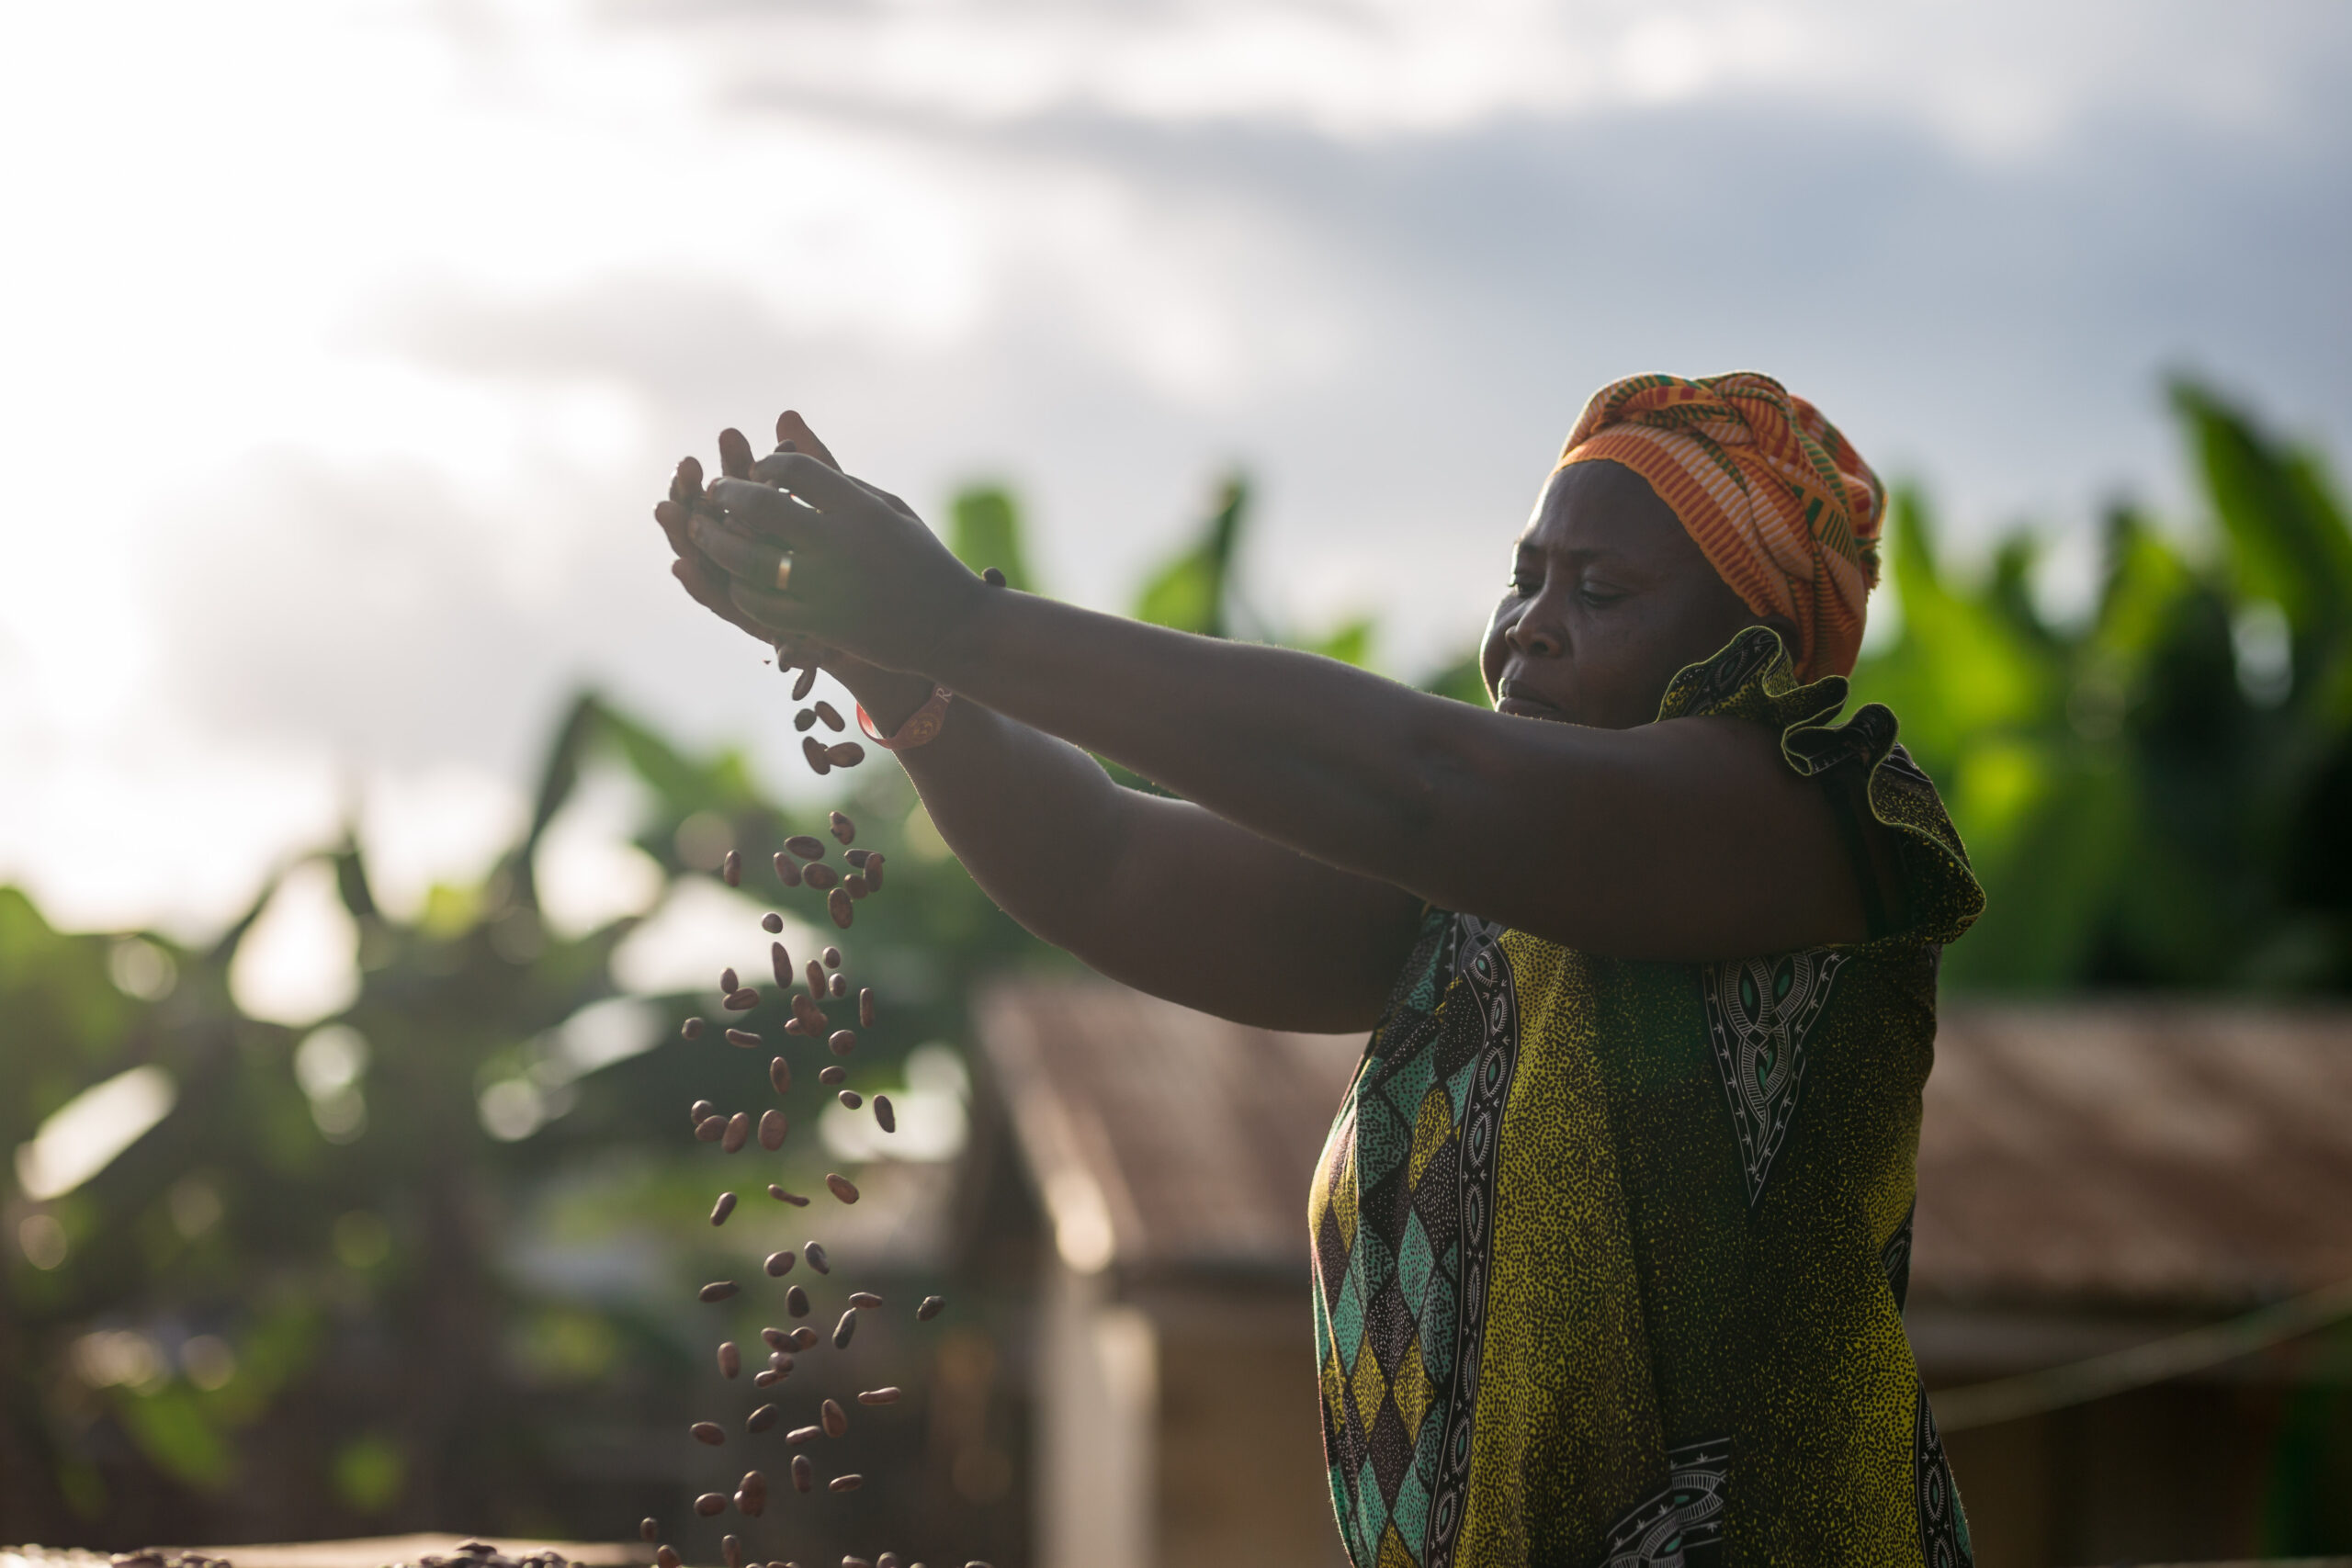 With an Eye on Agenda 2030, Fairtrade and B Lab Launch ‘Key’ SDG Partnership